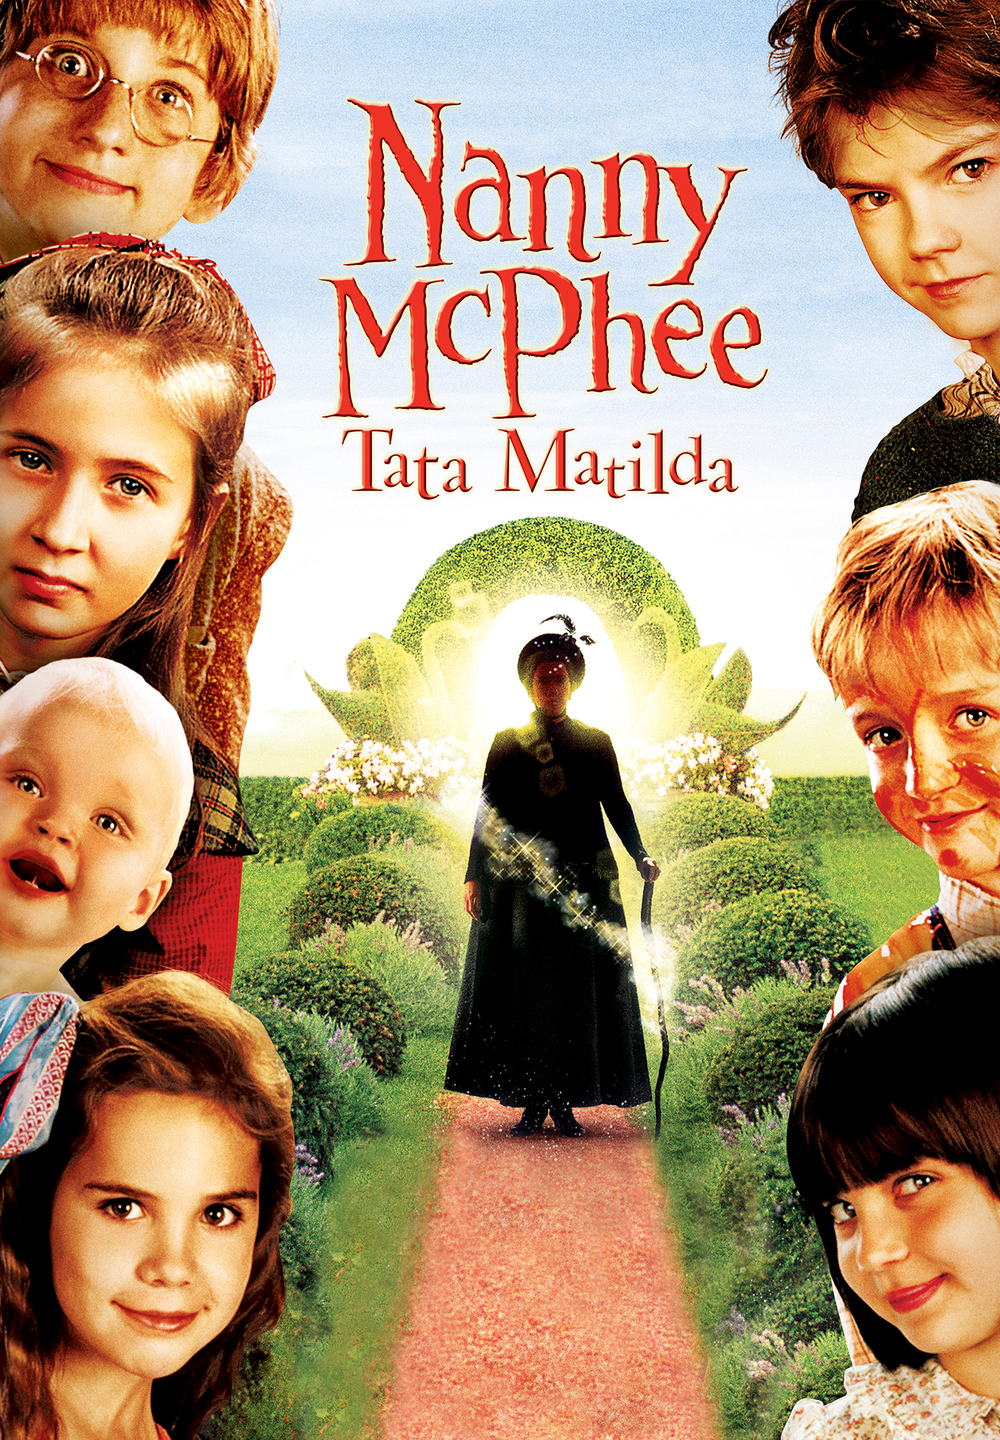 Tata Matilda – Nanny McPhee [HD] (2005)